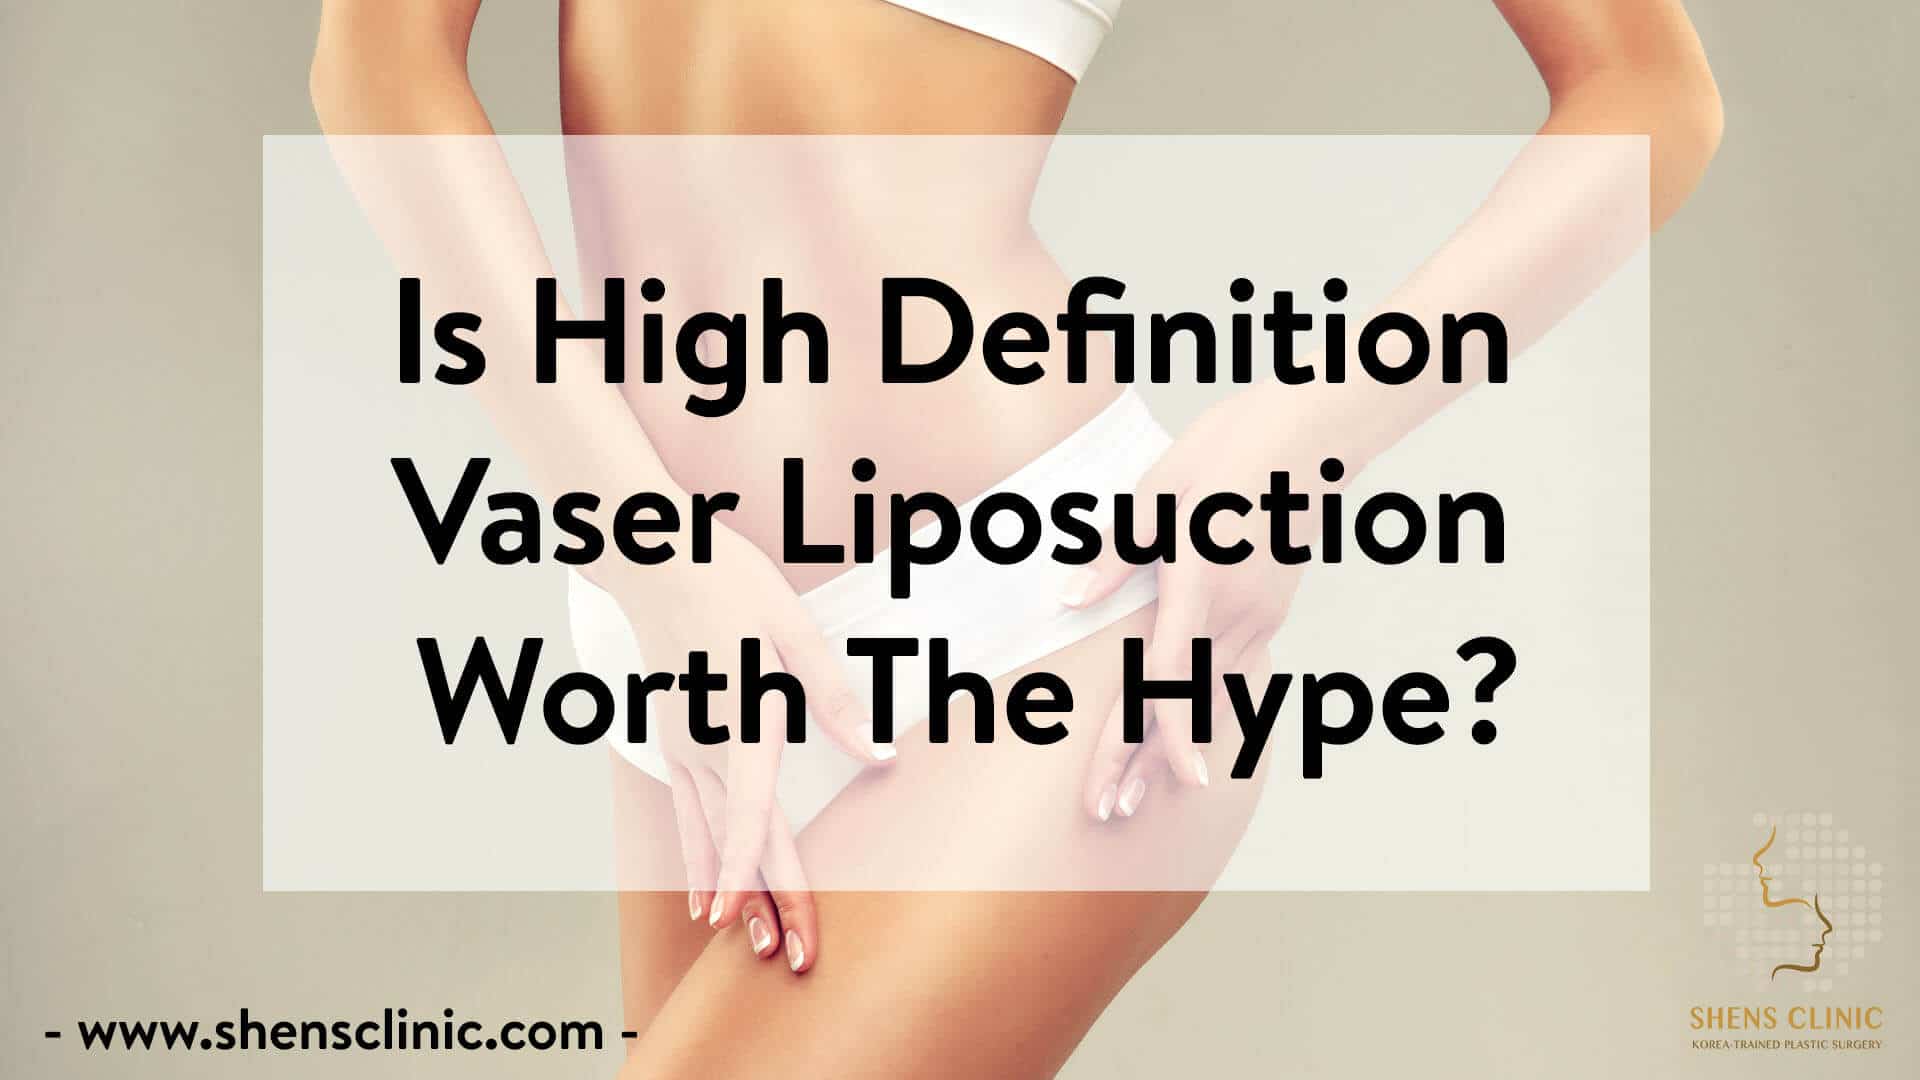 Vaser liposuction worth hype